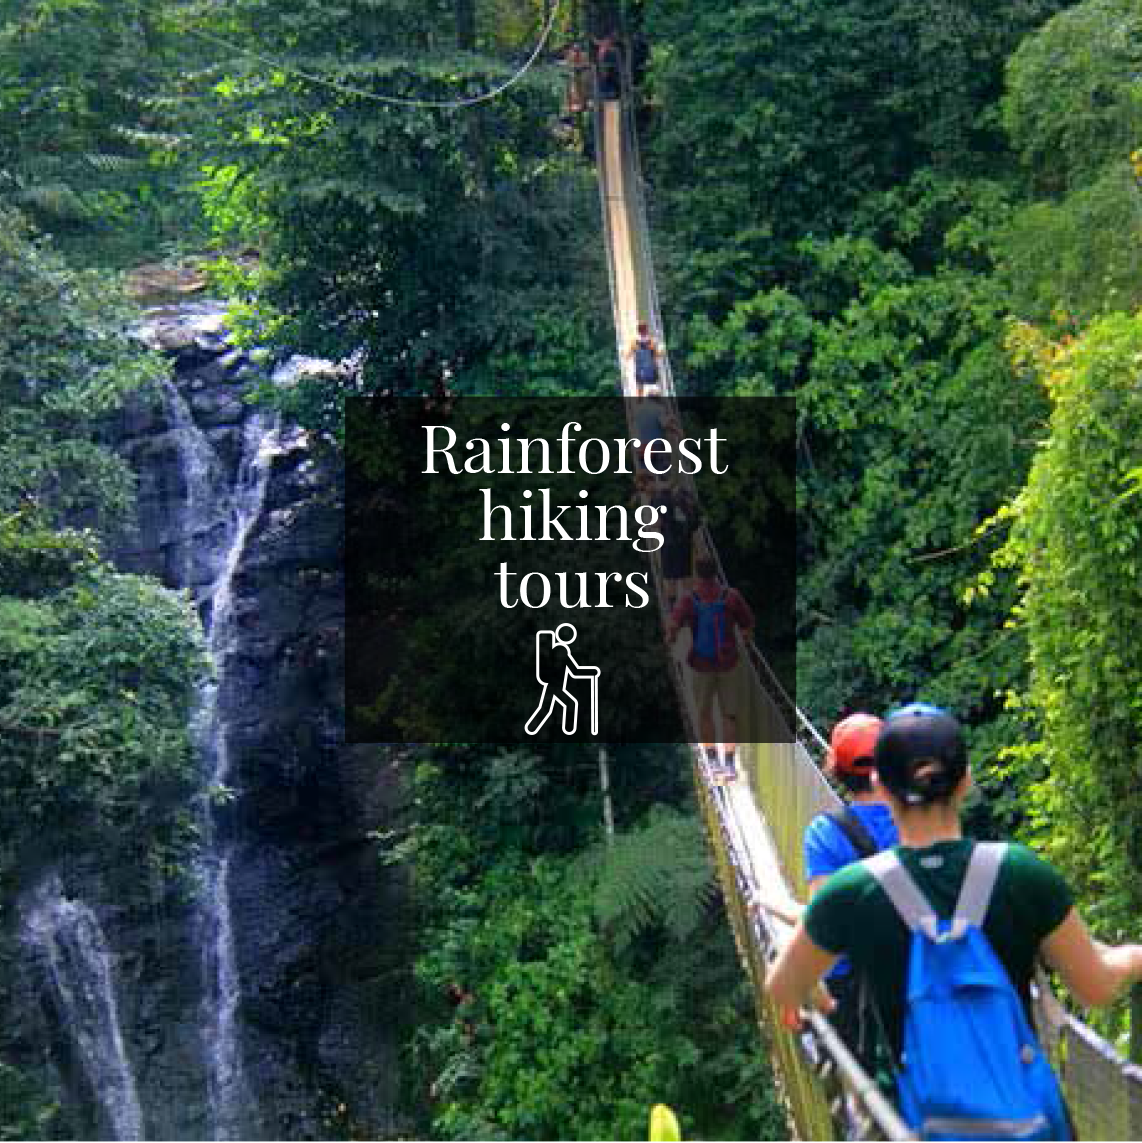 Rainforest hiking tours